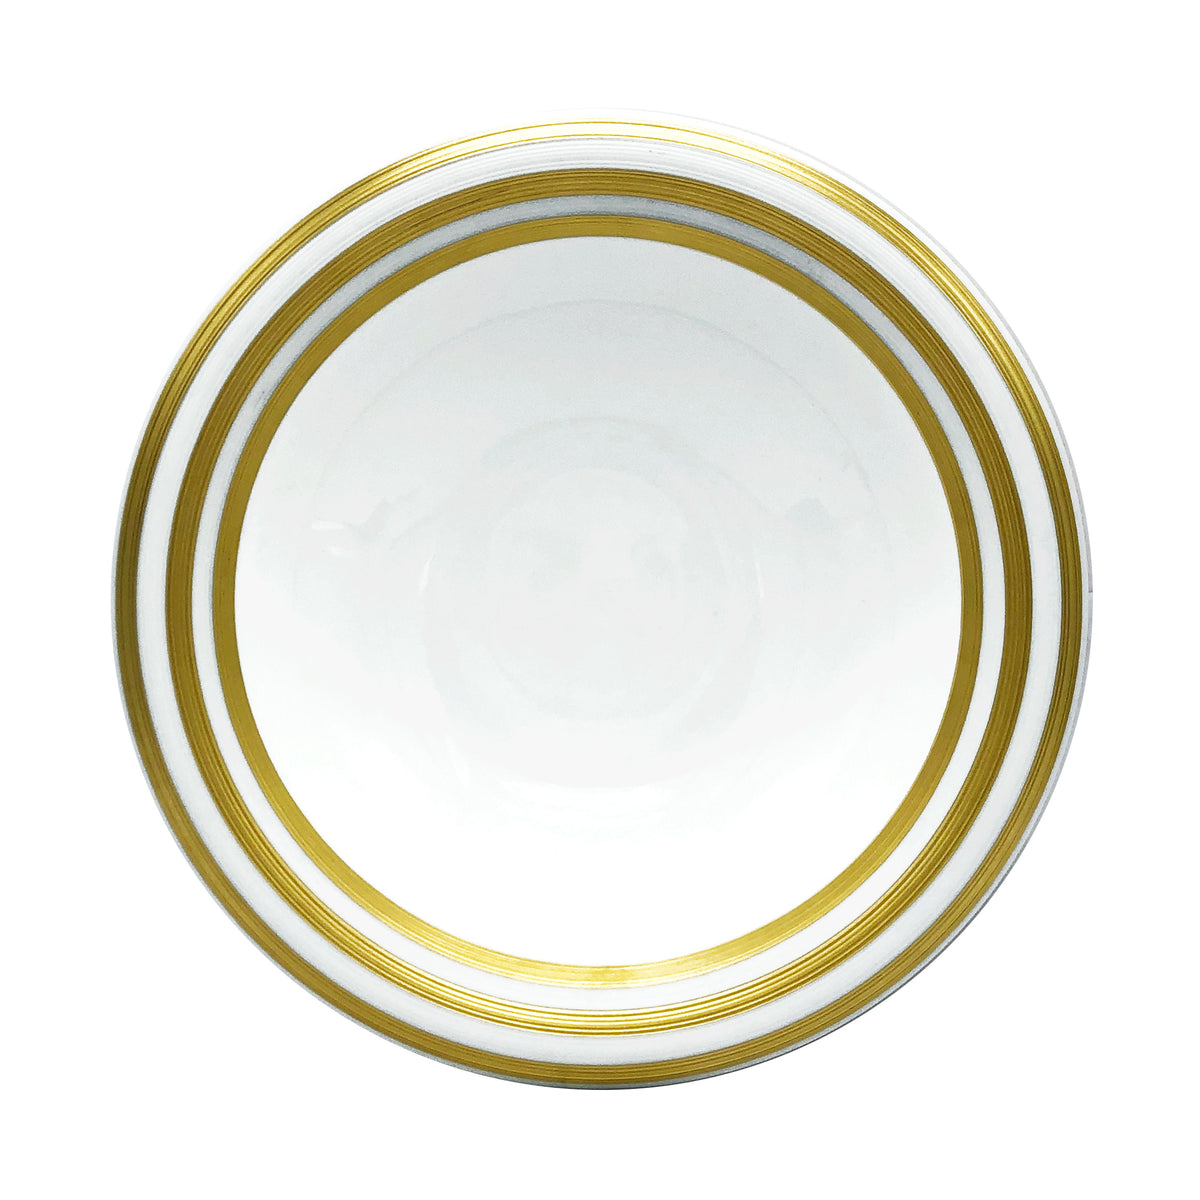 HEMISPHERE Gold stripes - Bubble soup plate